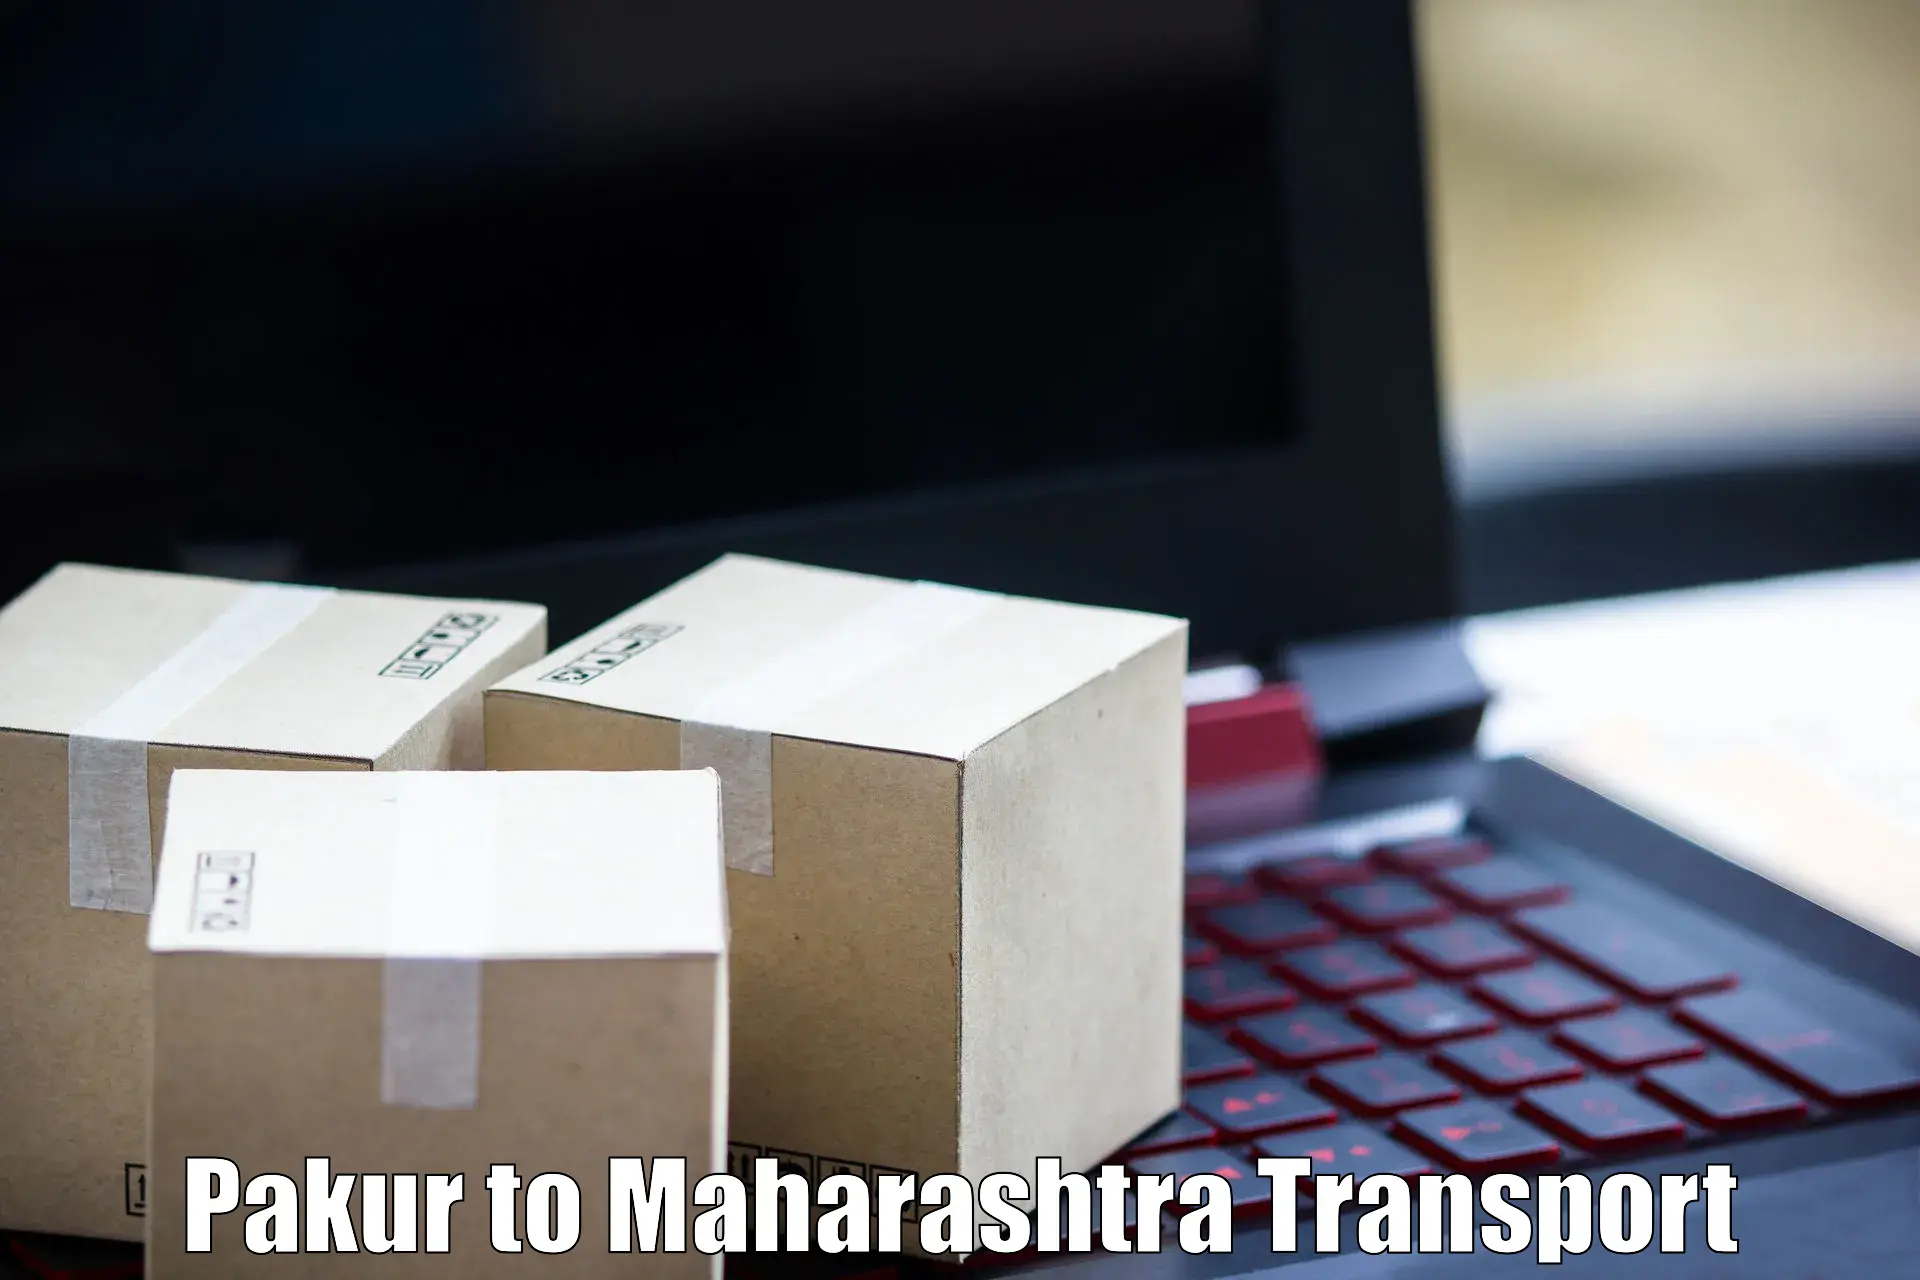 Online transport service Pakur to Vita